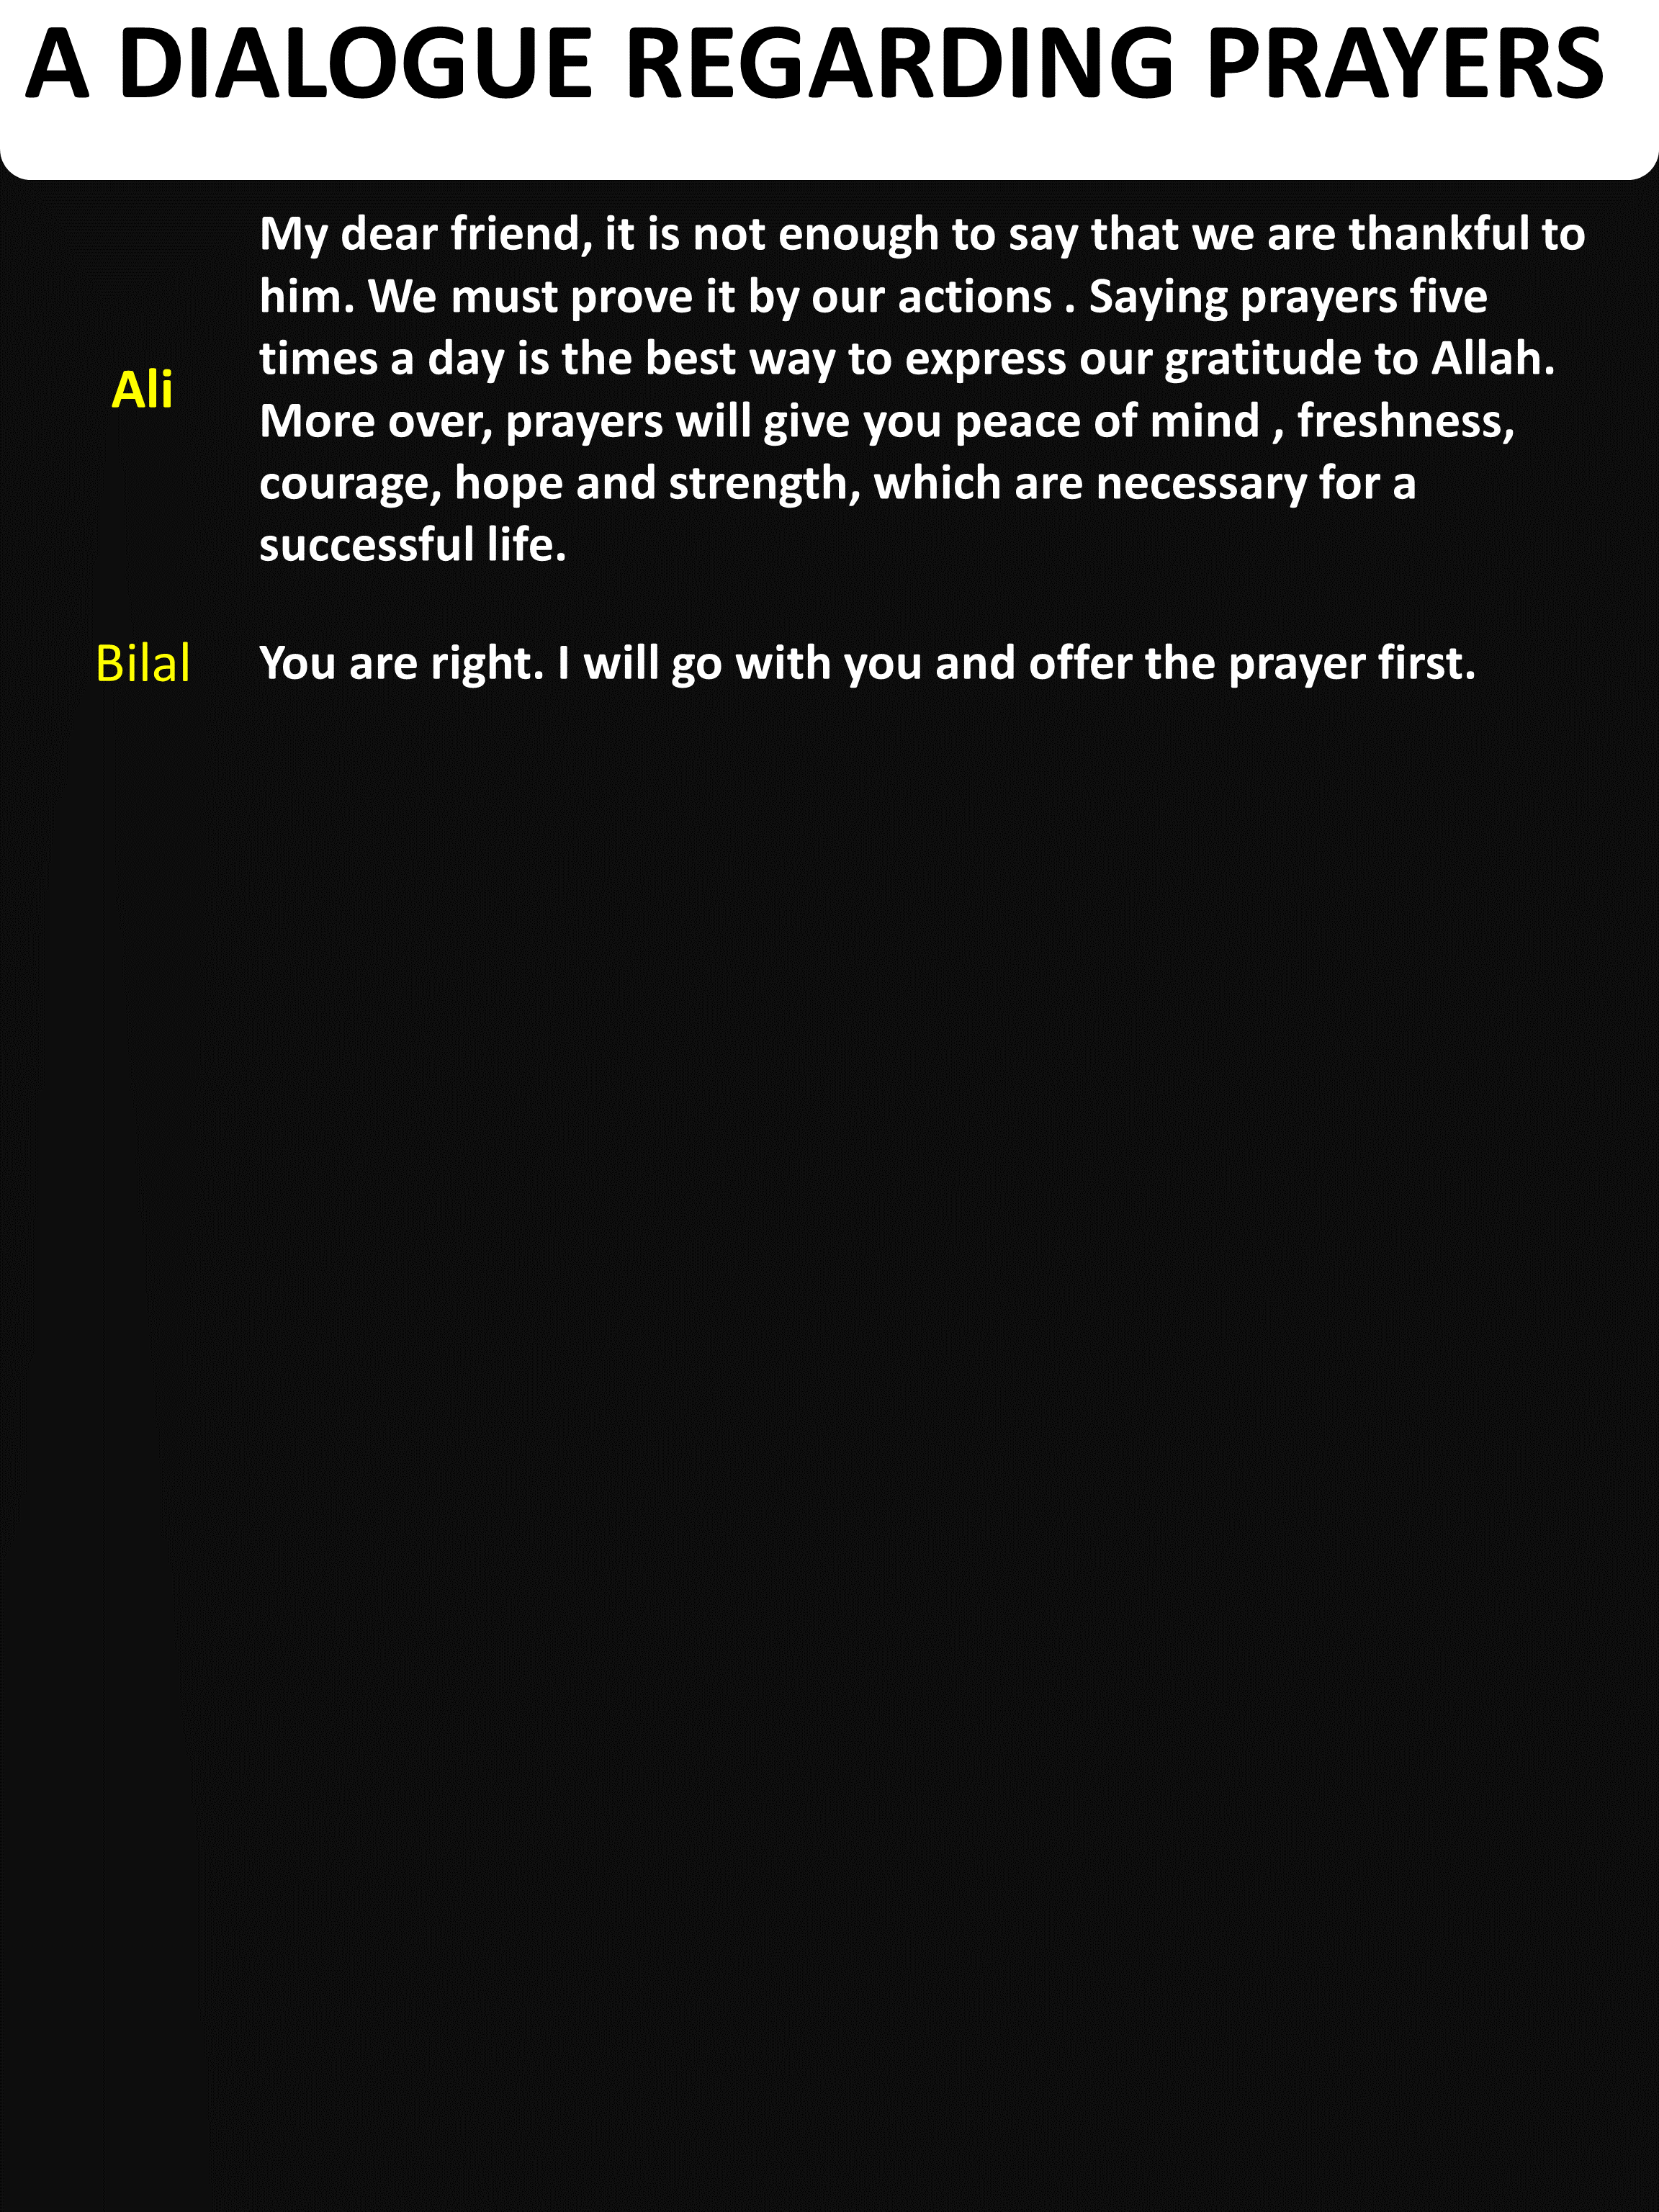 A Dialogue About Prayers